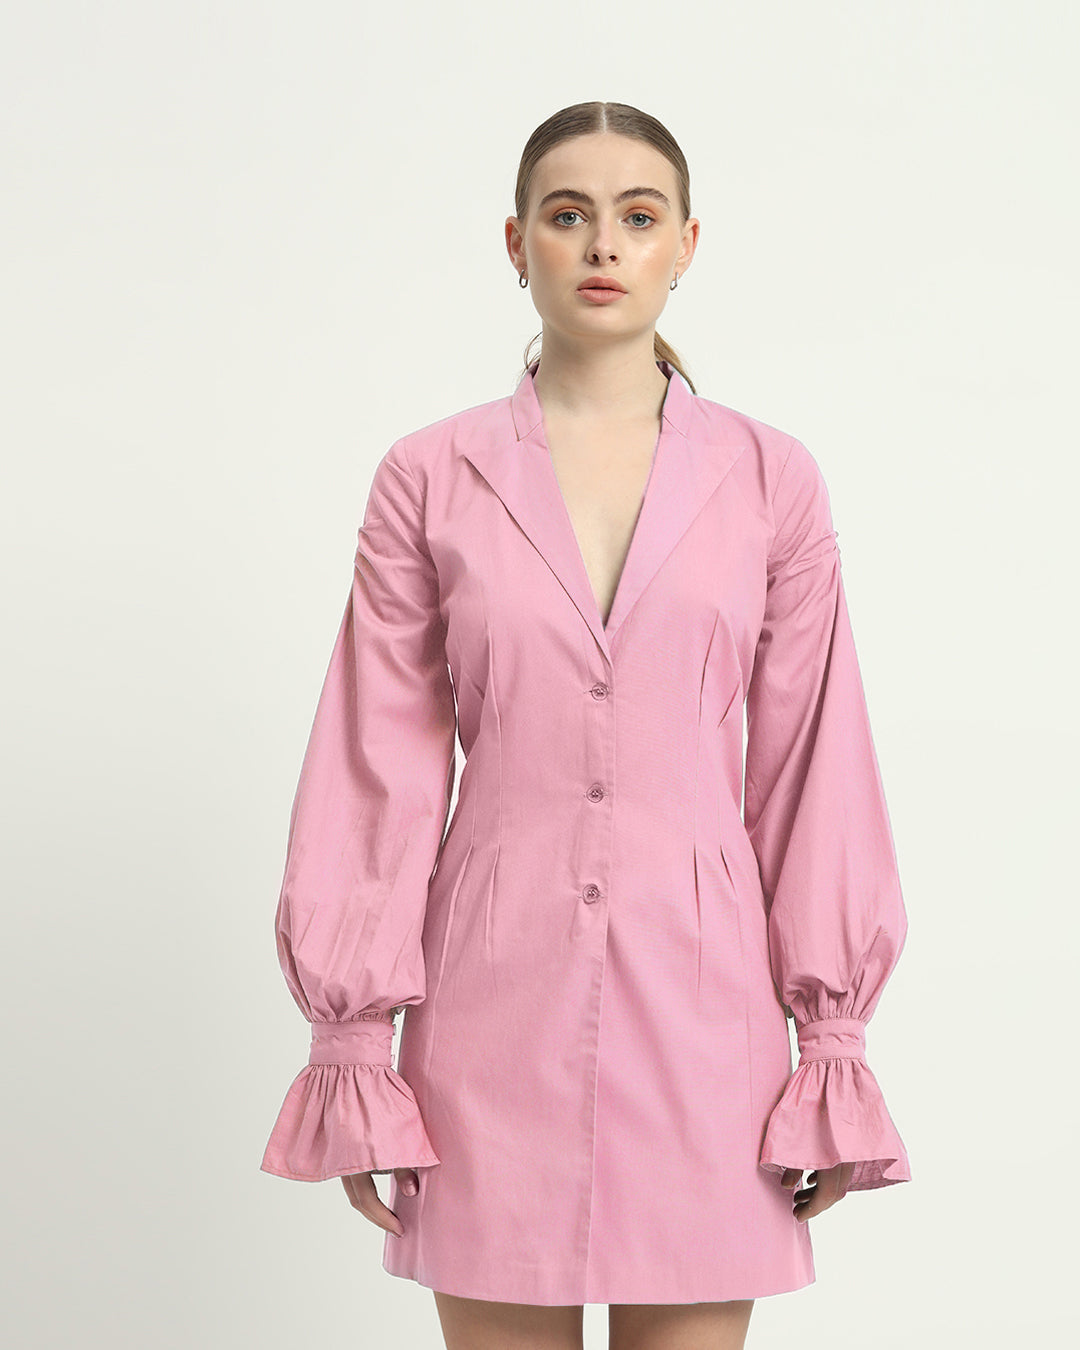 The Sedona Fondant Pink Cotton Dress